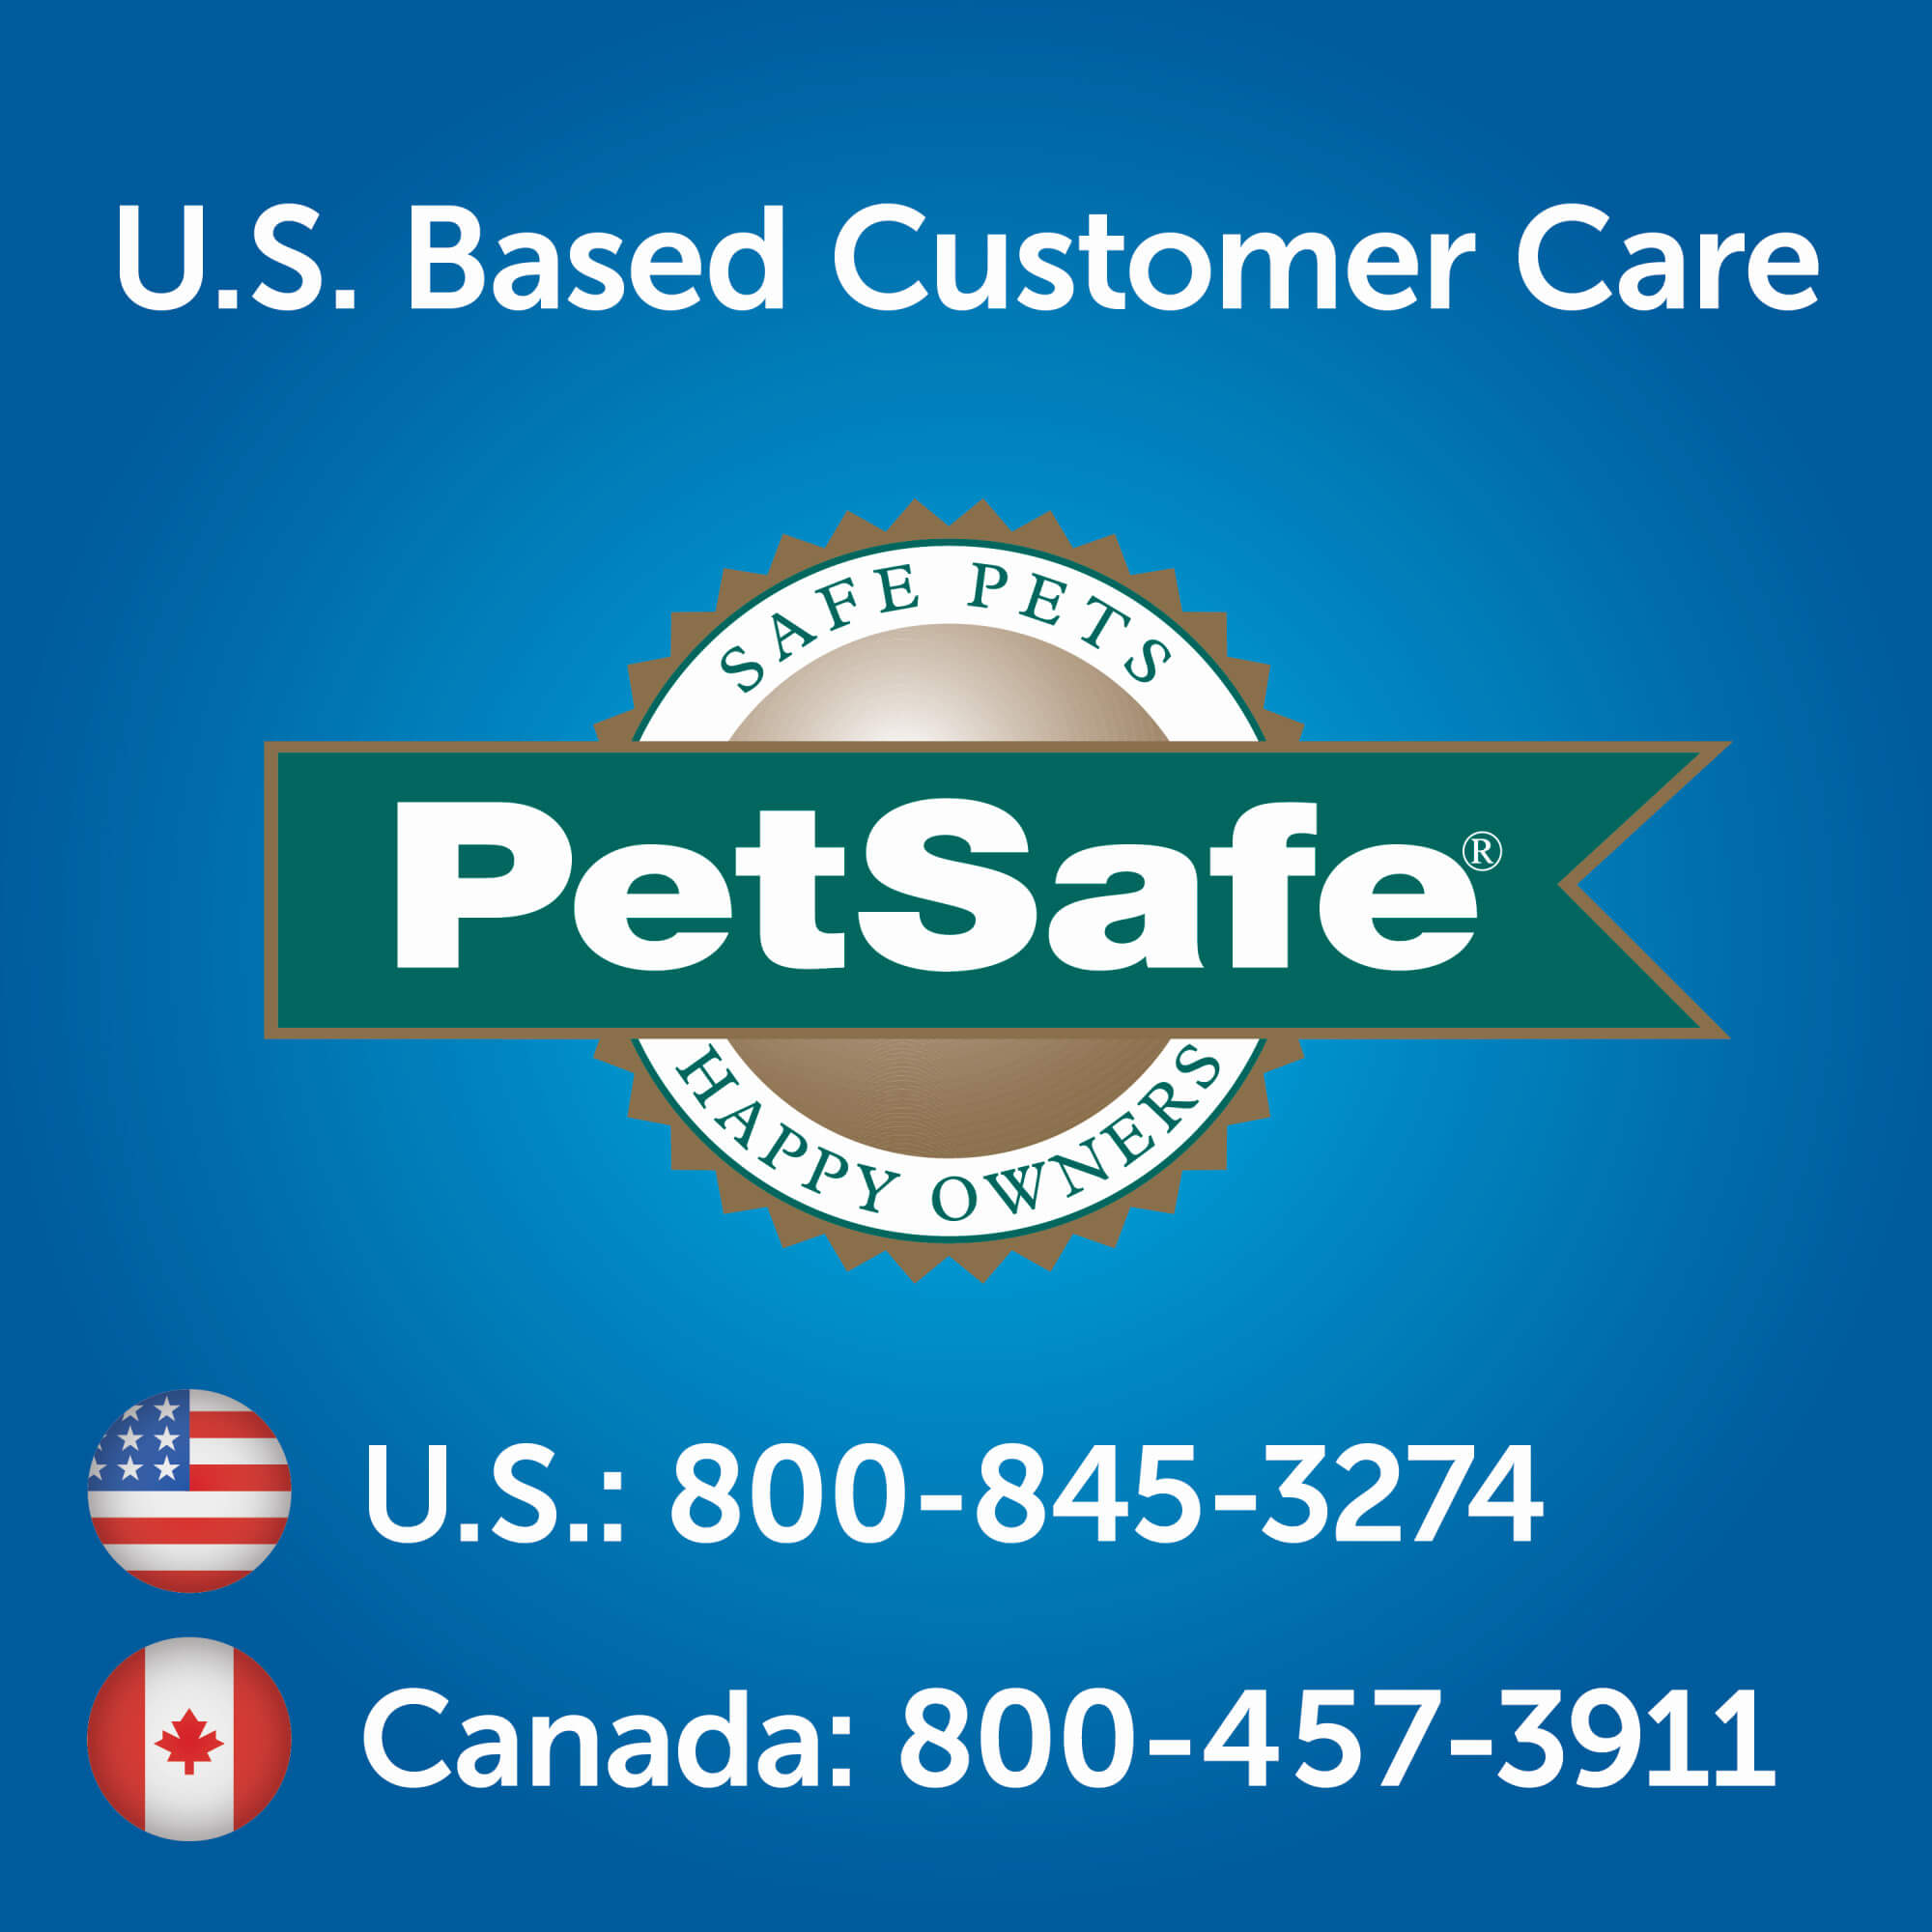 Petsafe U.S. based customer care